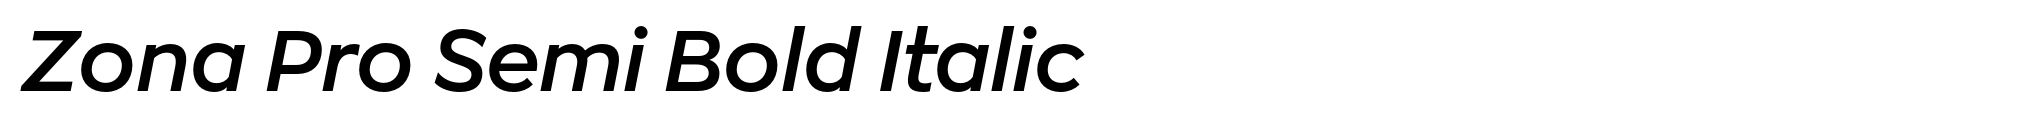 Zona Pro Semi Bold Italic image